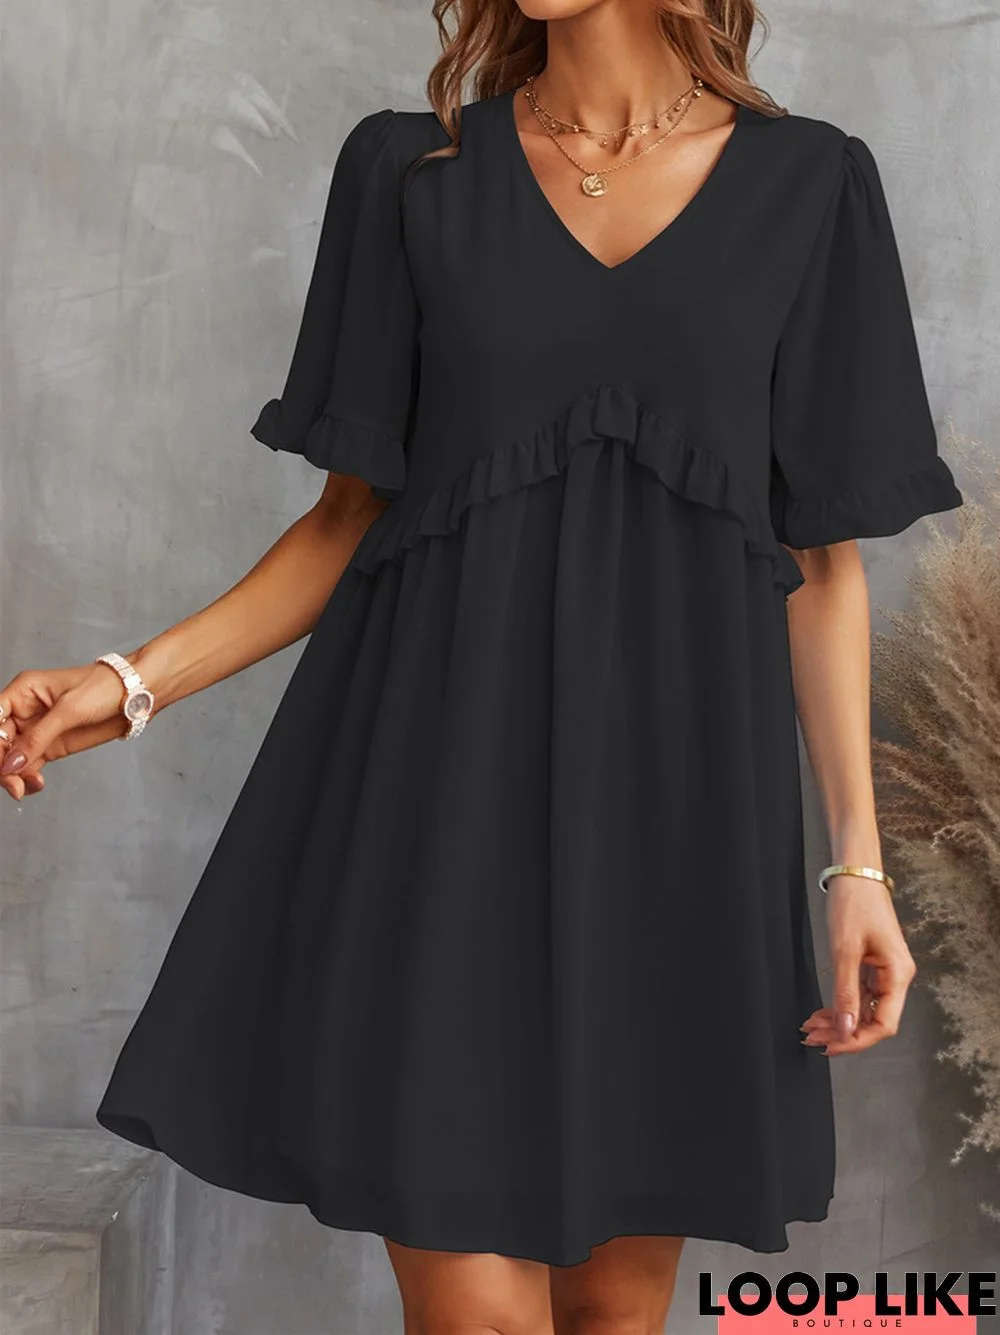 Chiffon Dress Women's Fashion V-Neck Loose Slim Skirt Black Dresses